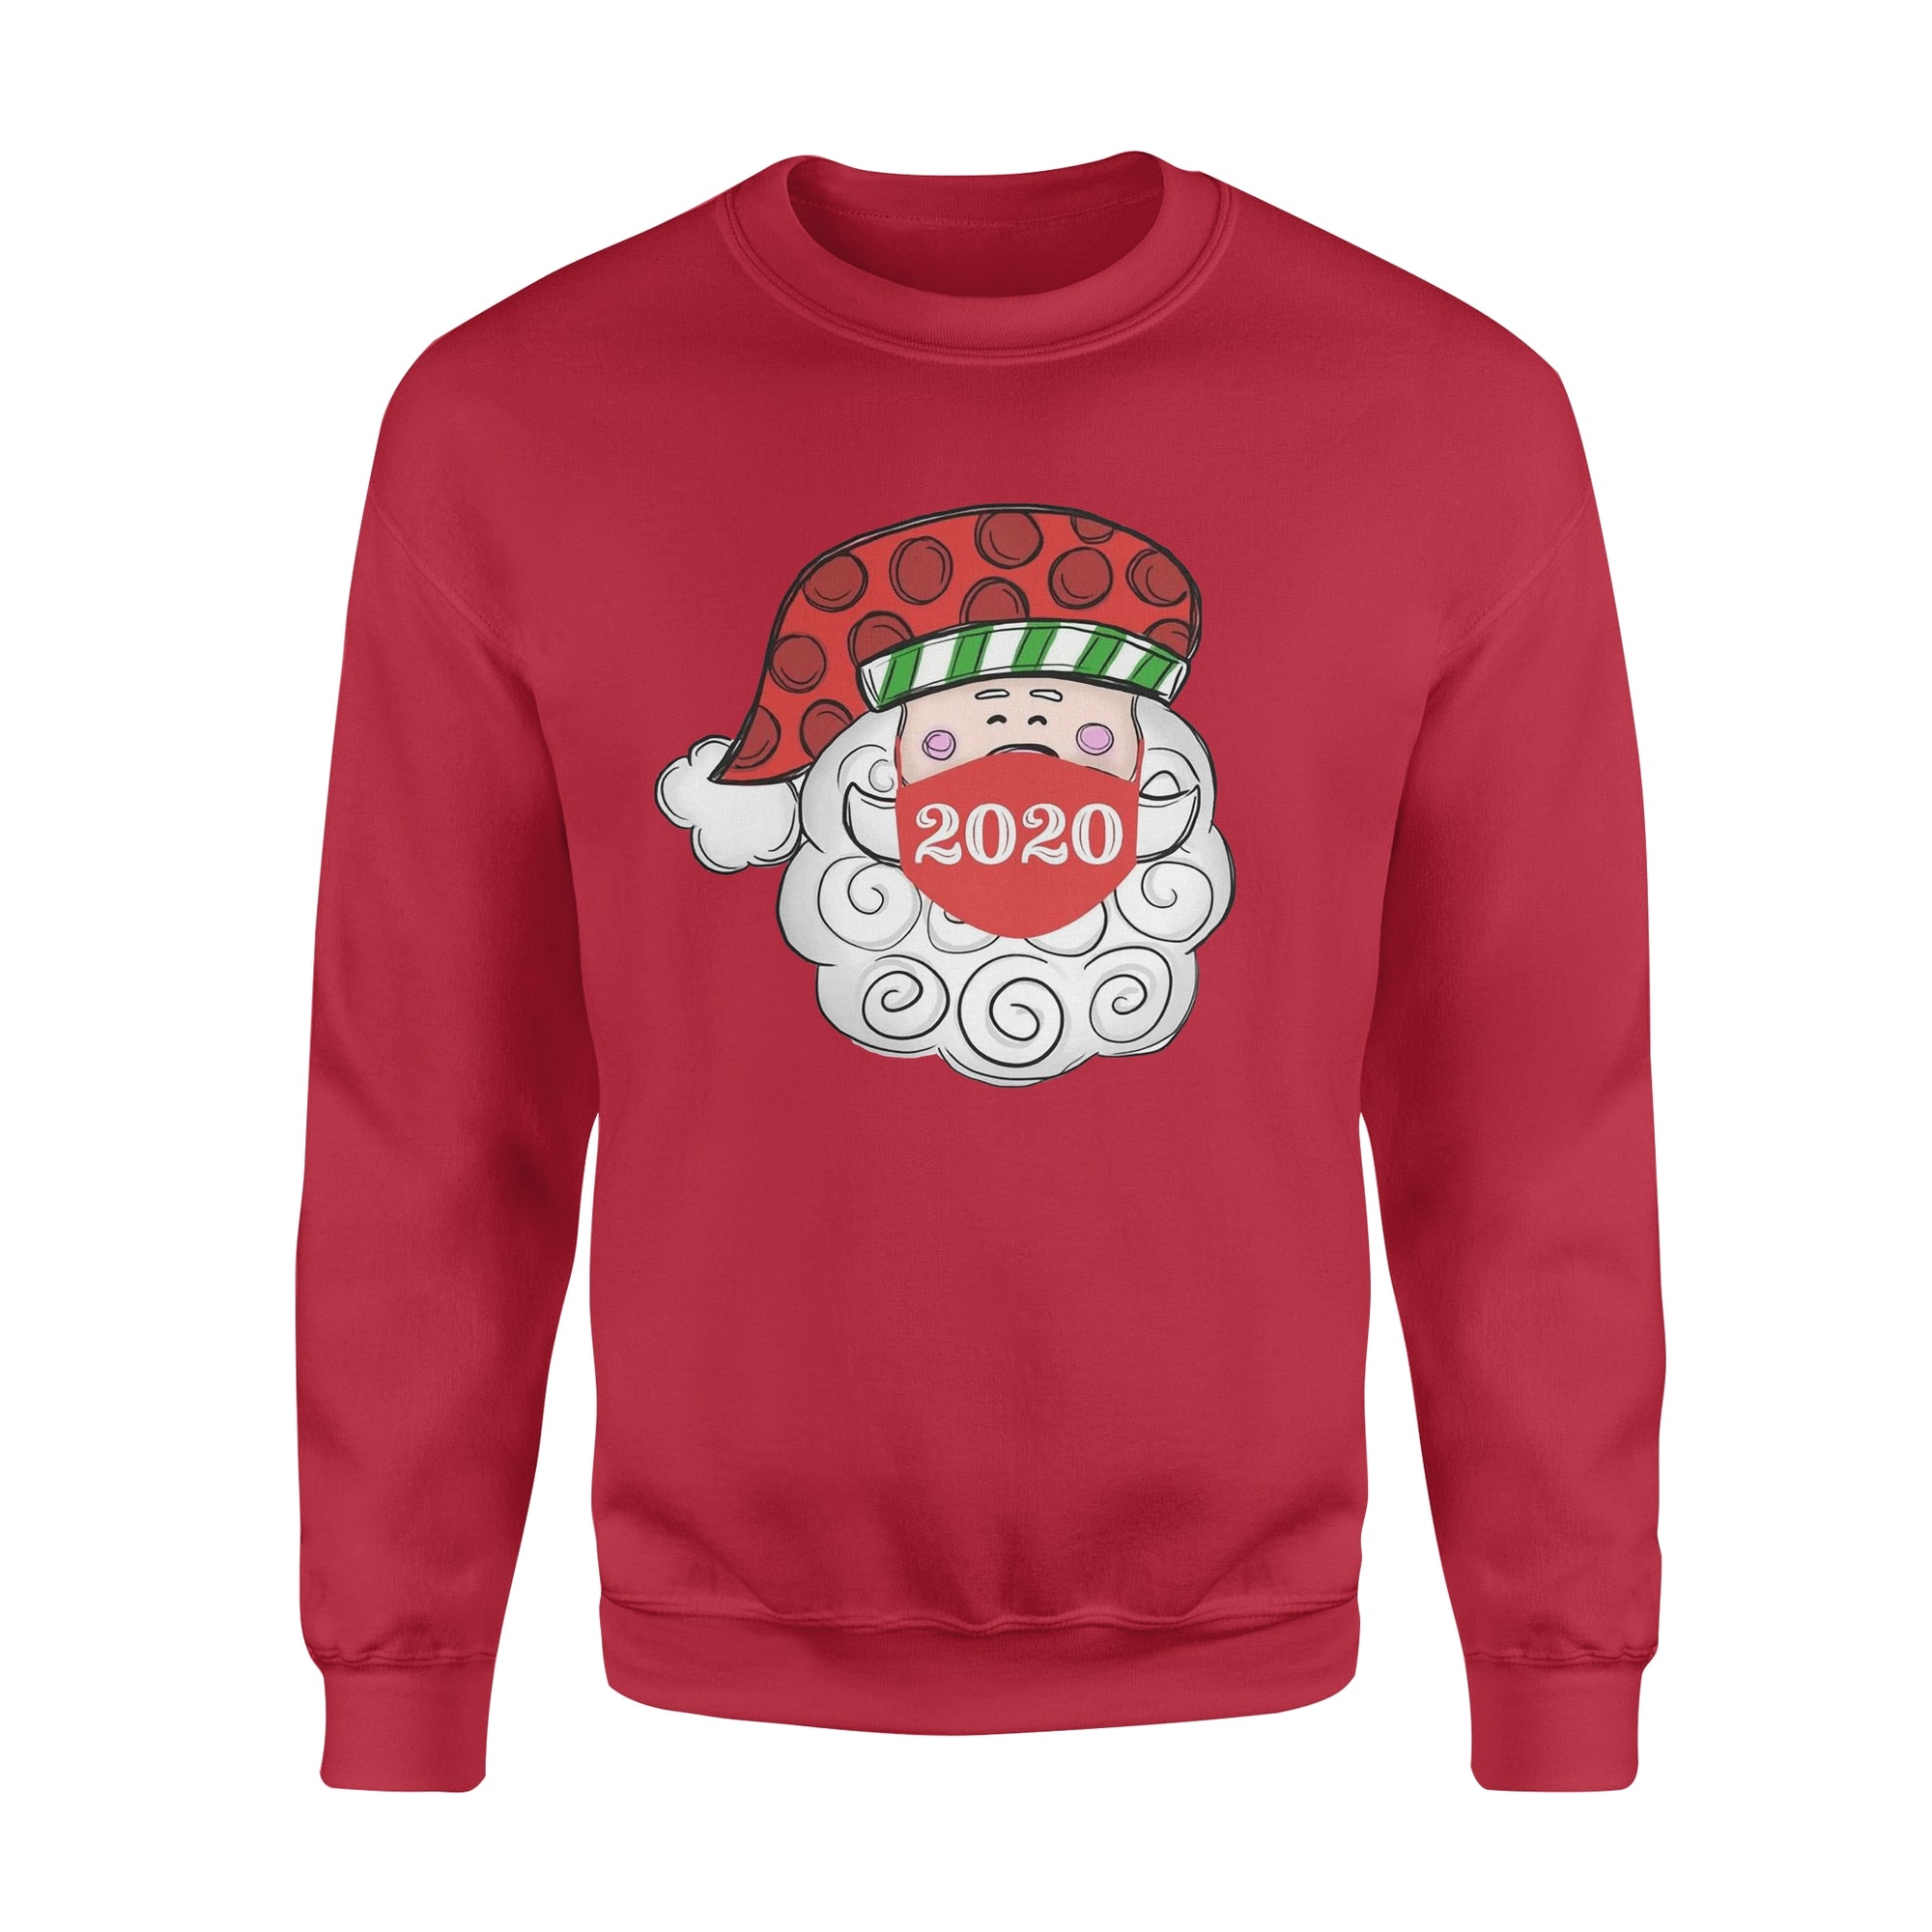 Funny Santa Claus Christmas 2020 Gifts Ideas - Standard Crew Neck Sweatshirt